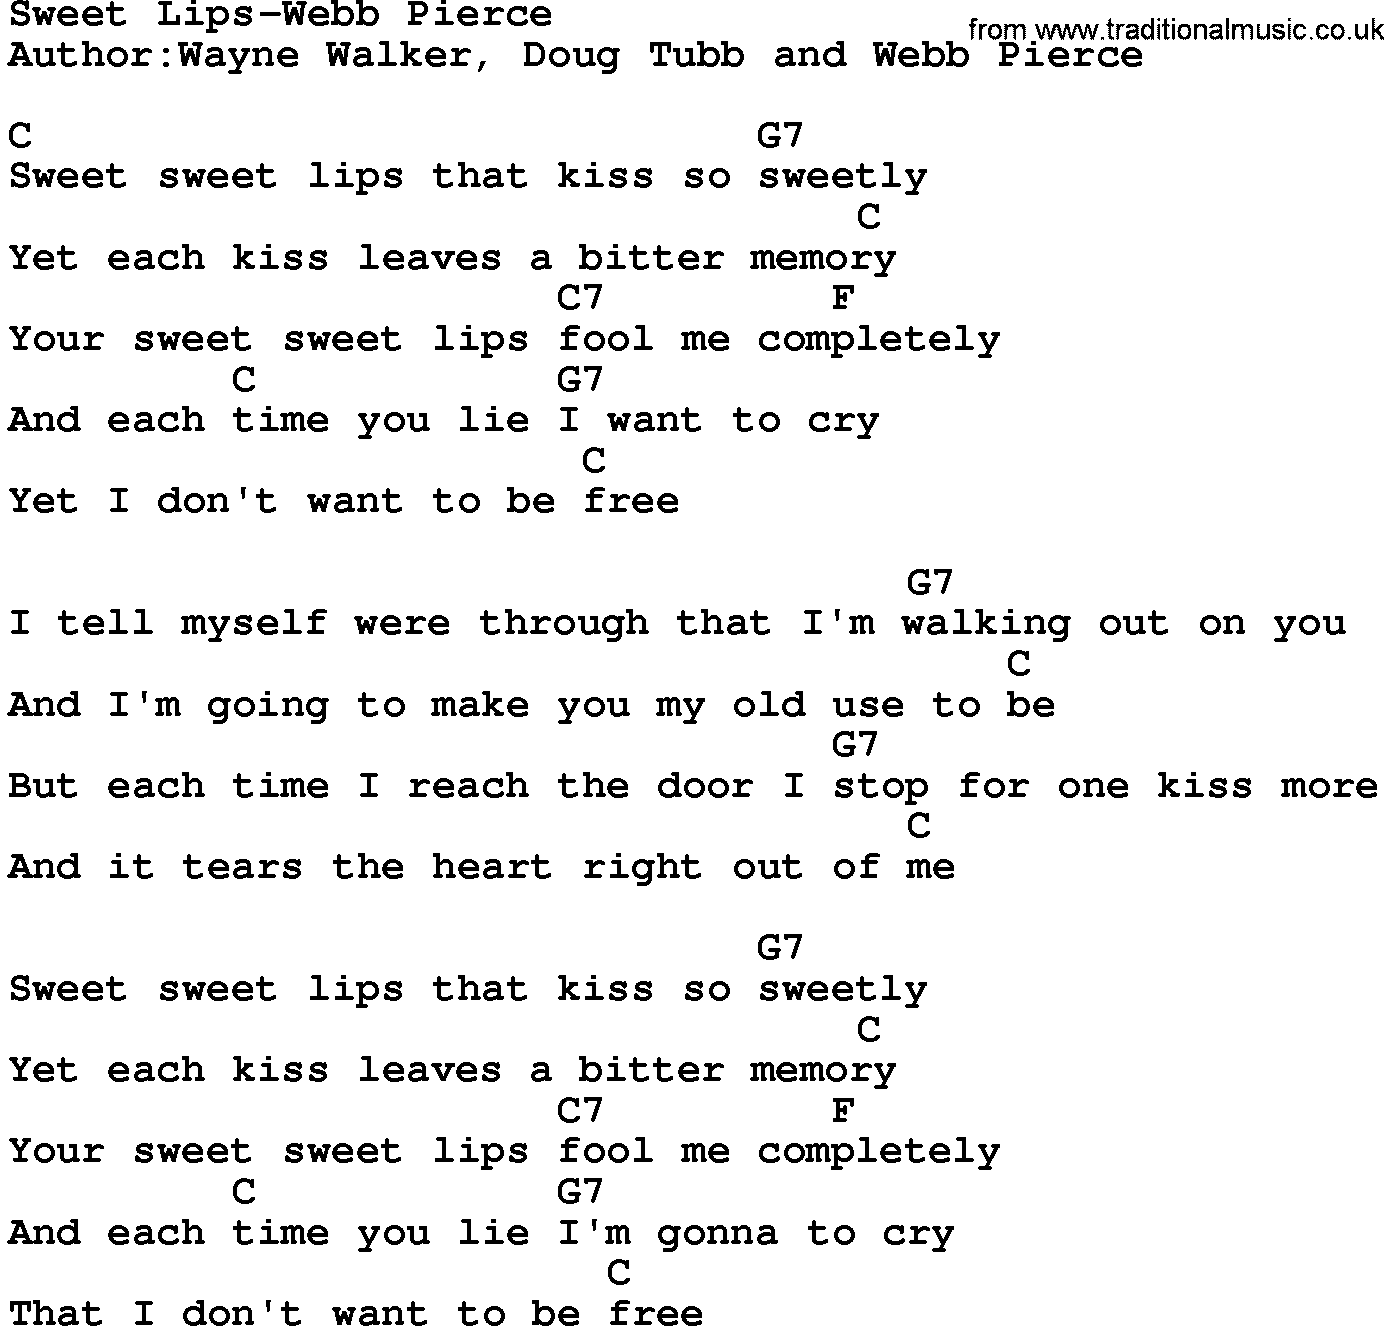 Country music song: Sweet Lips-Webb Pierce lyrics and chords